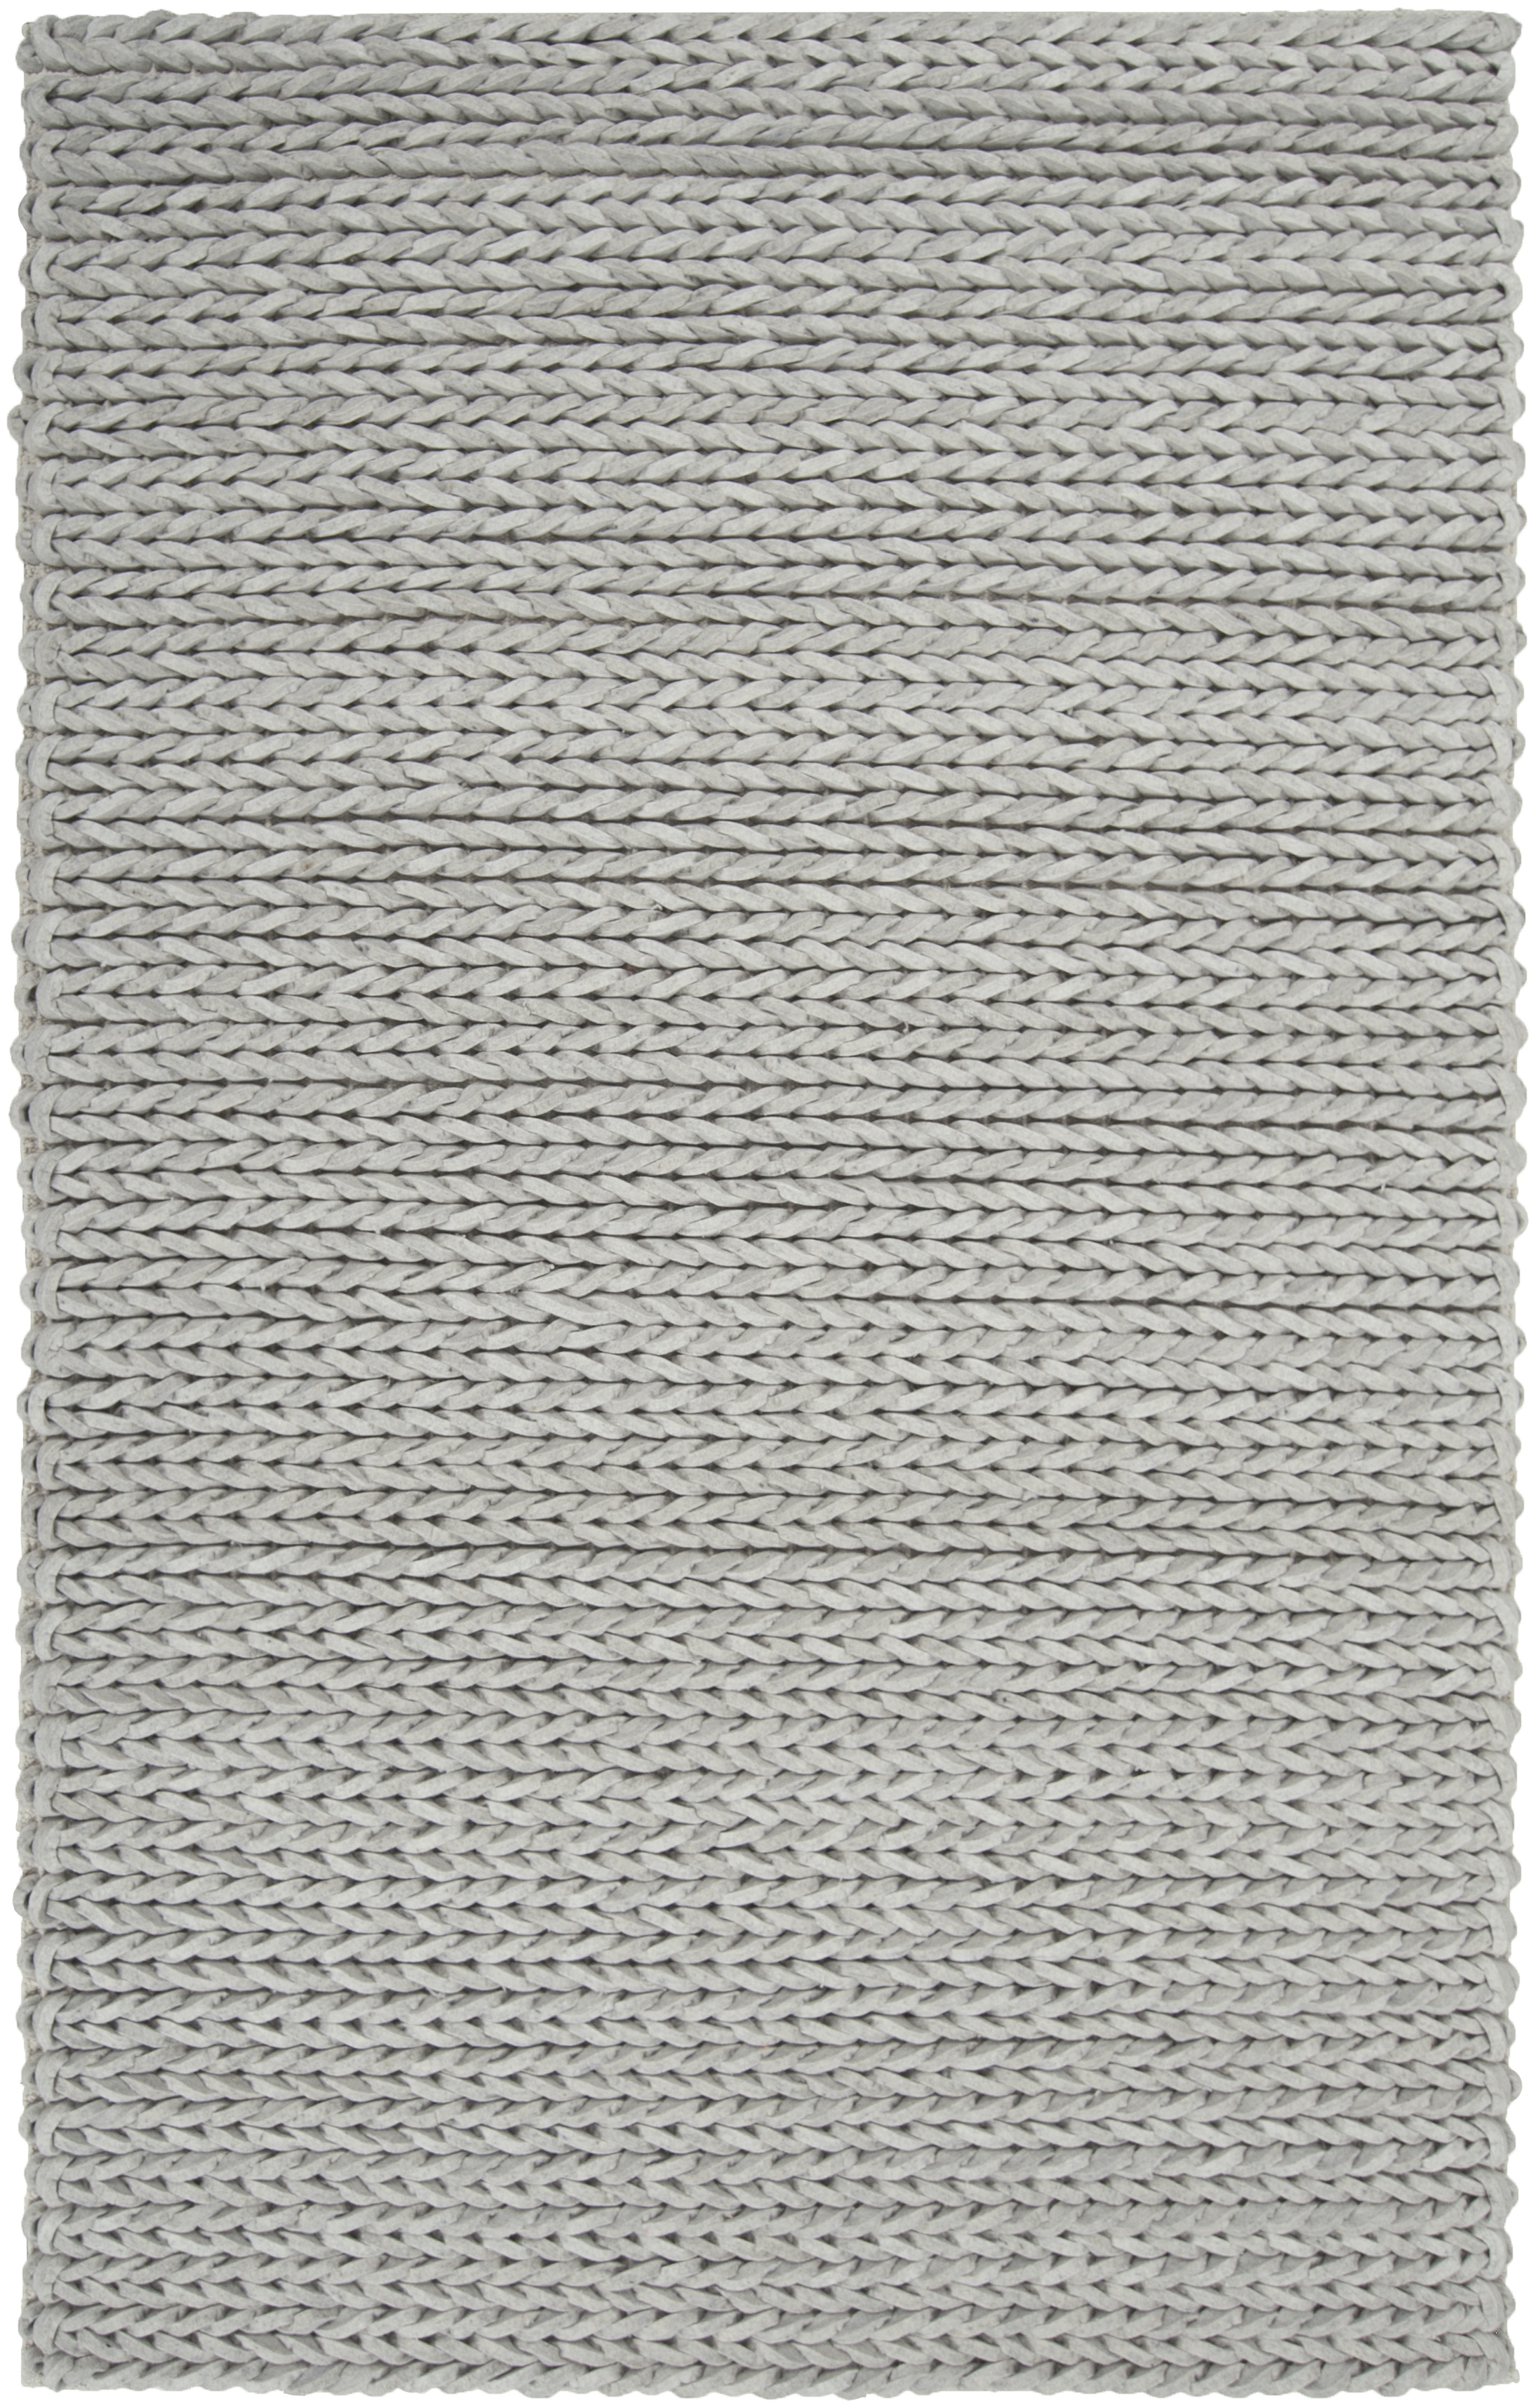 Anchorage Rug, 5' x 8' - Image 0